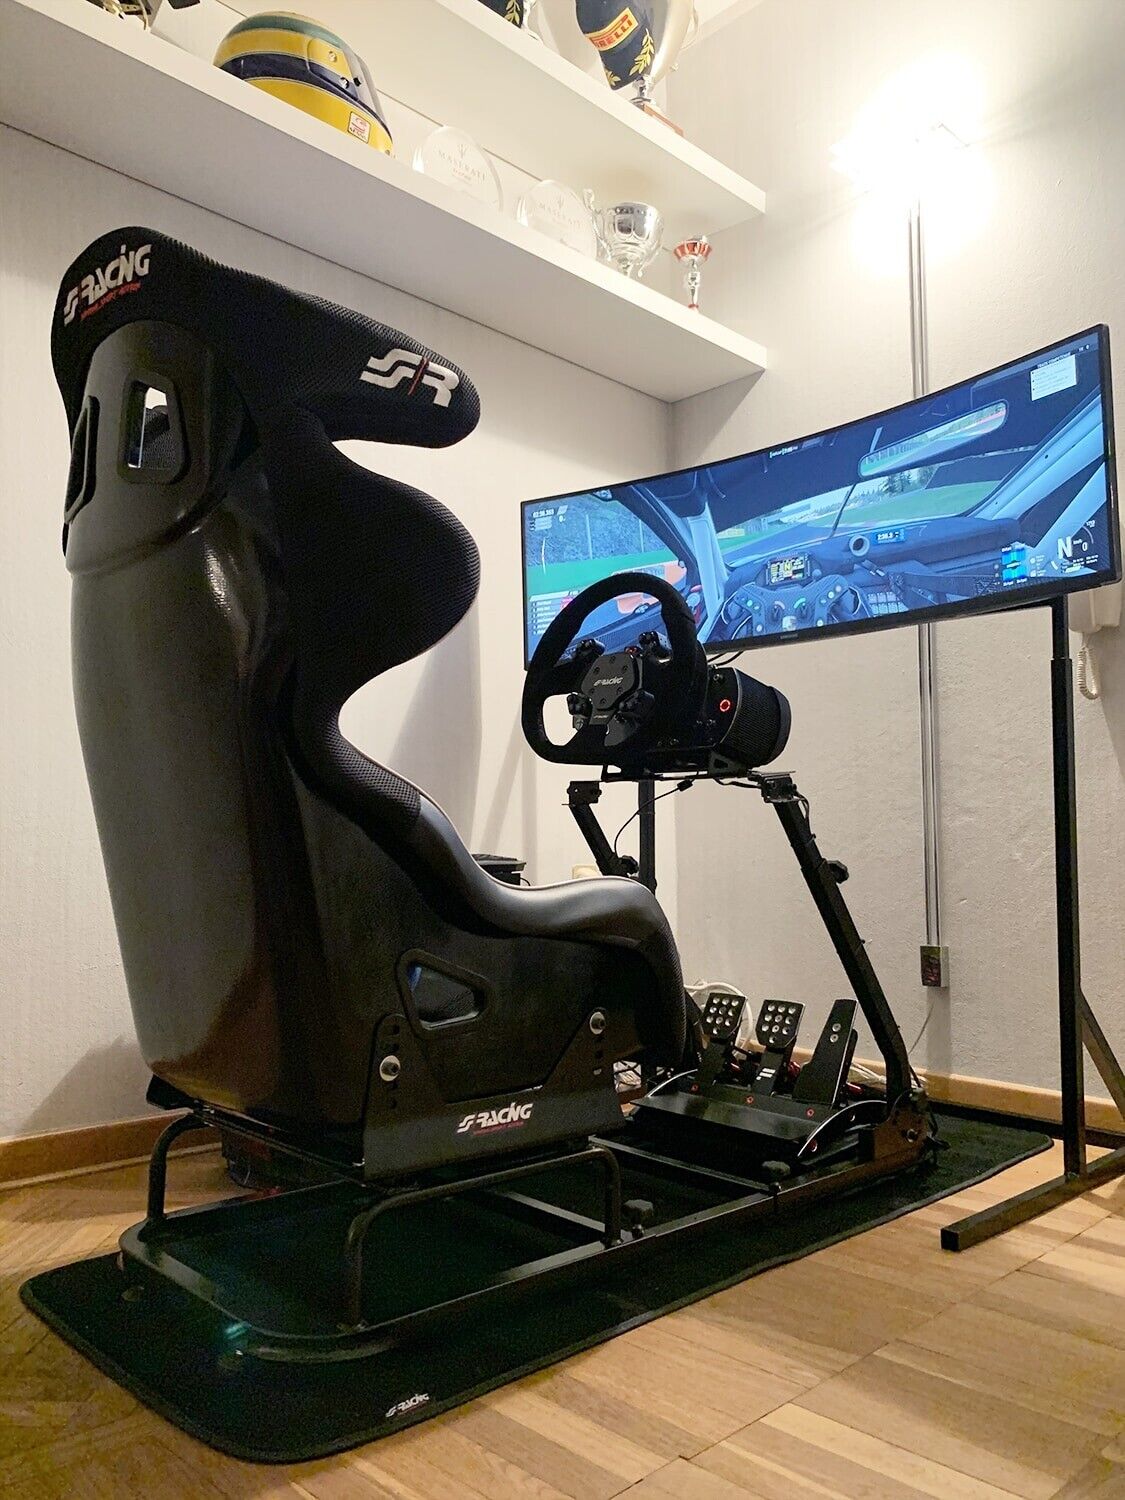 SR Fahrspiel Sim Racing Rahmengestell für Bildschirm, Sitz, Rad, Pedale, Xbox, PS, PC